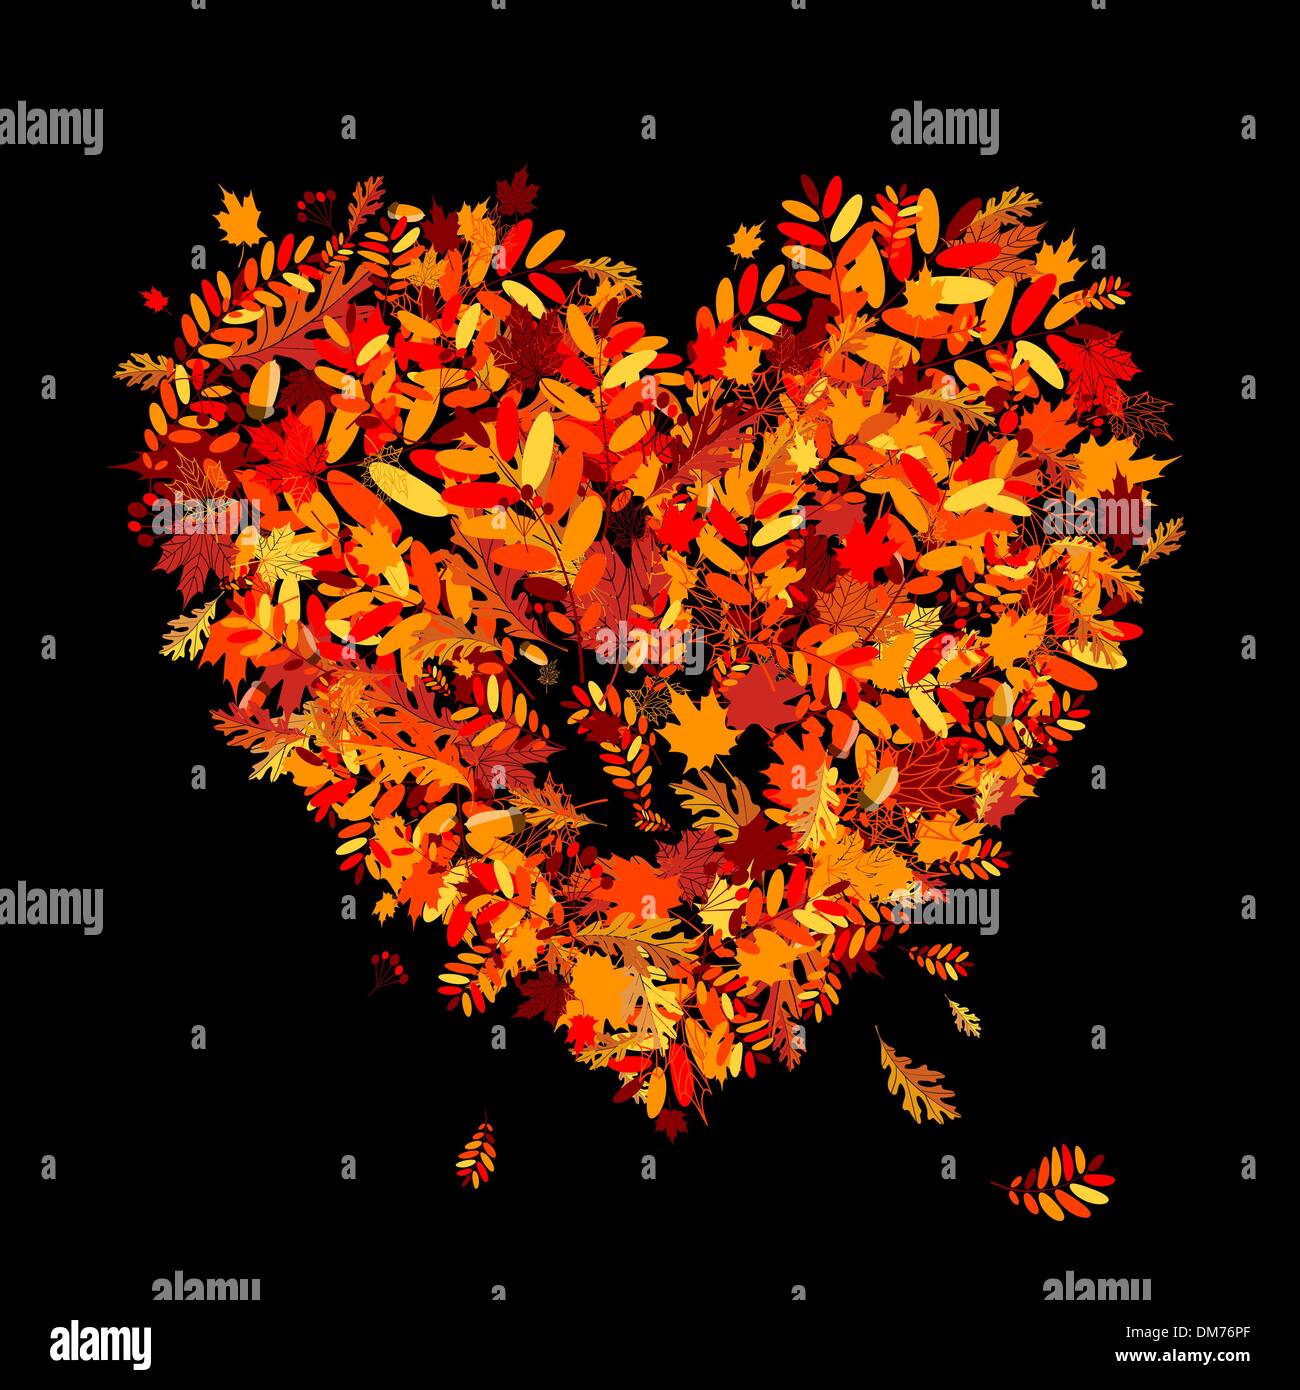 I love autumn! Heart shape from falling leaves Stock Vector